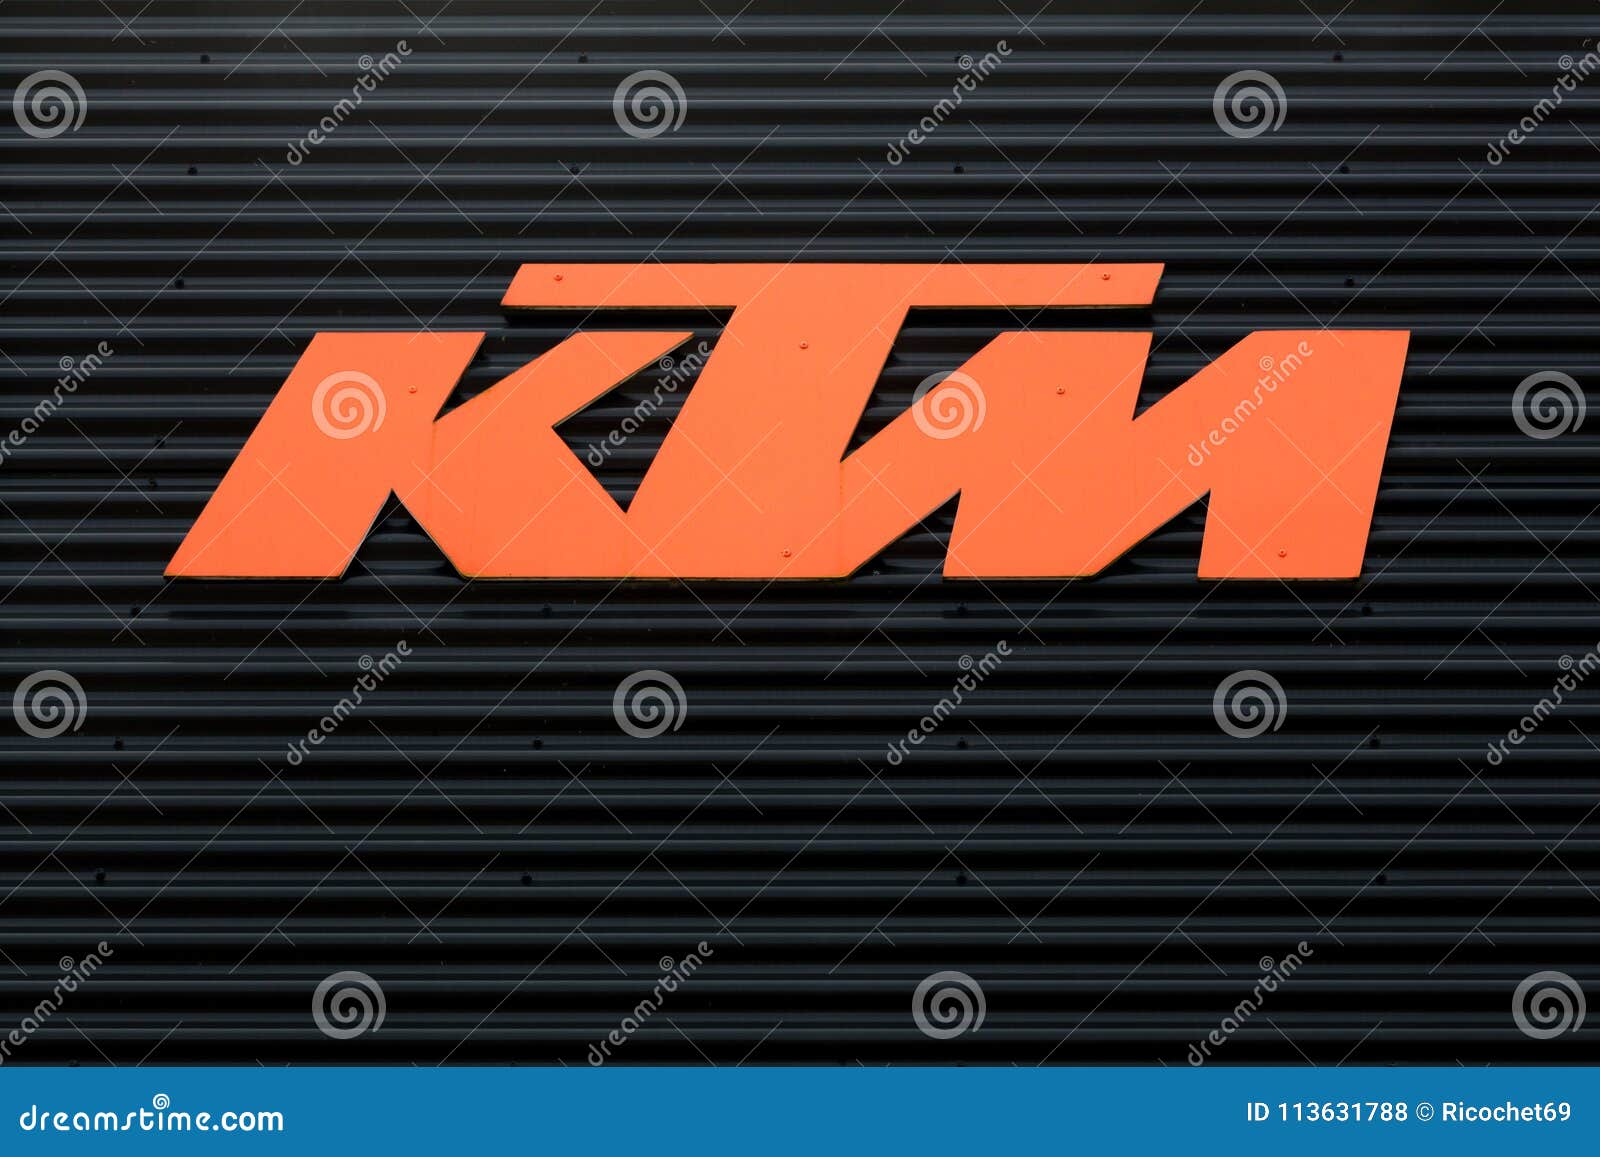 Ktm Logo - 3D Model by 3d_logoman